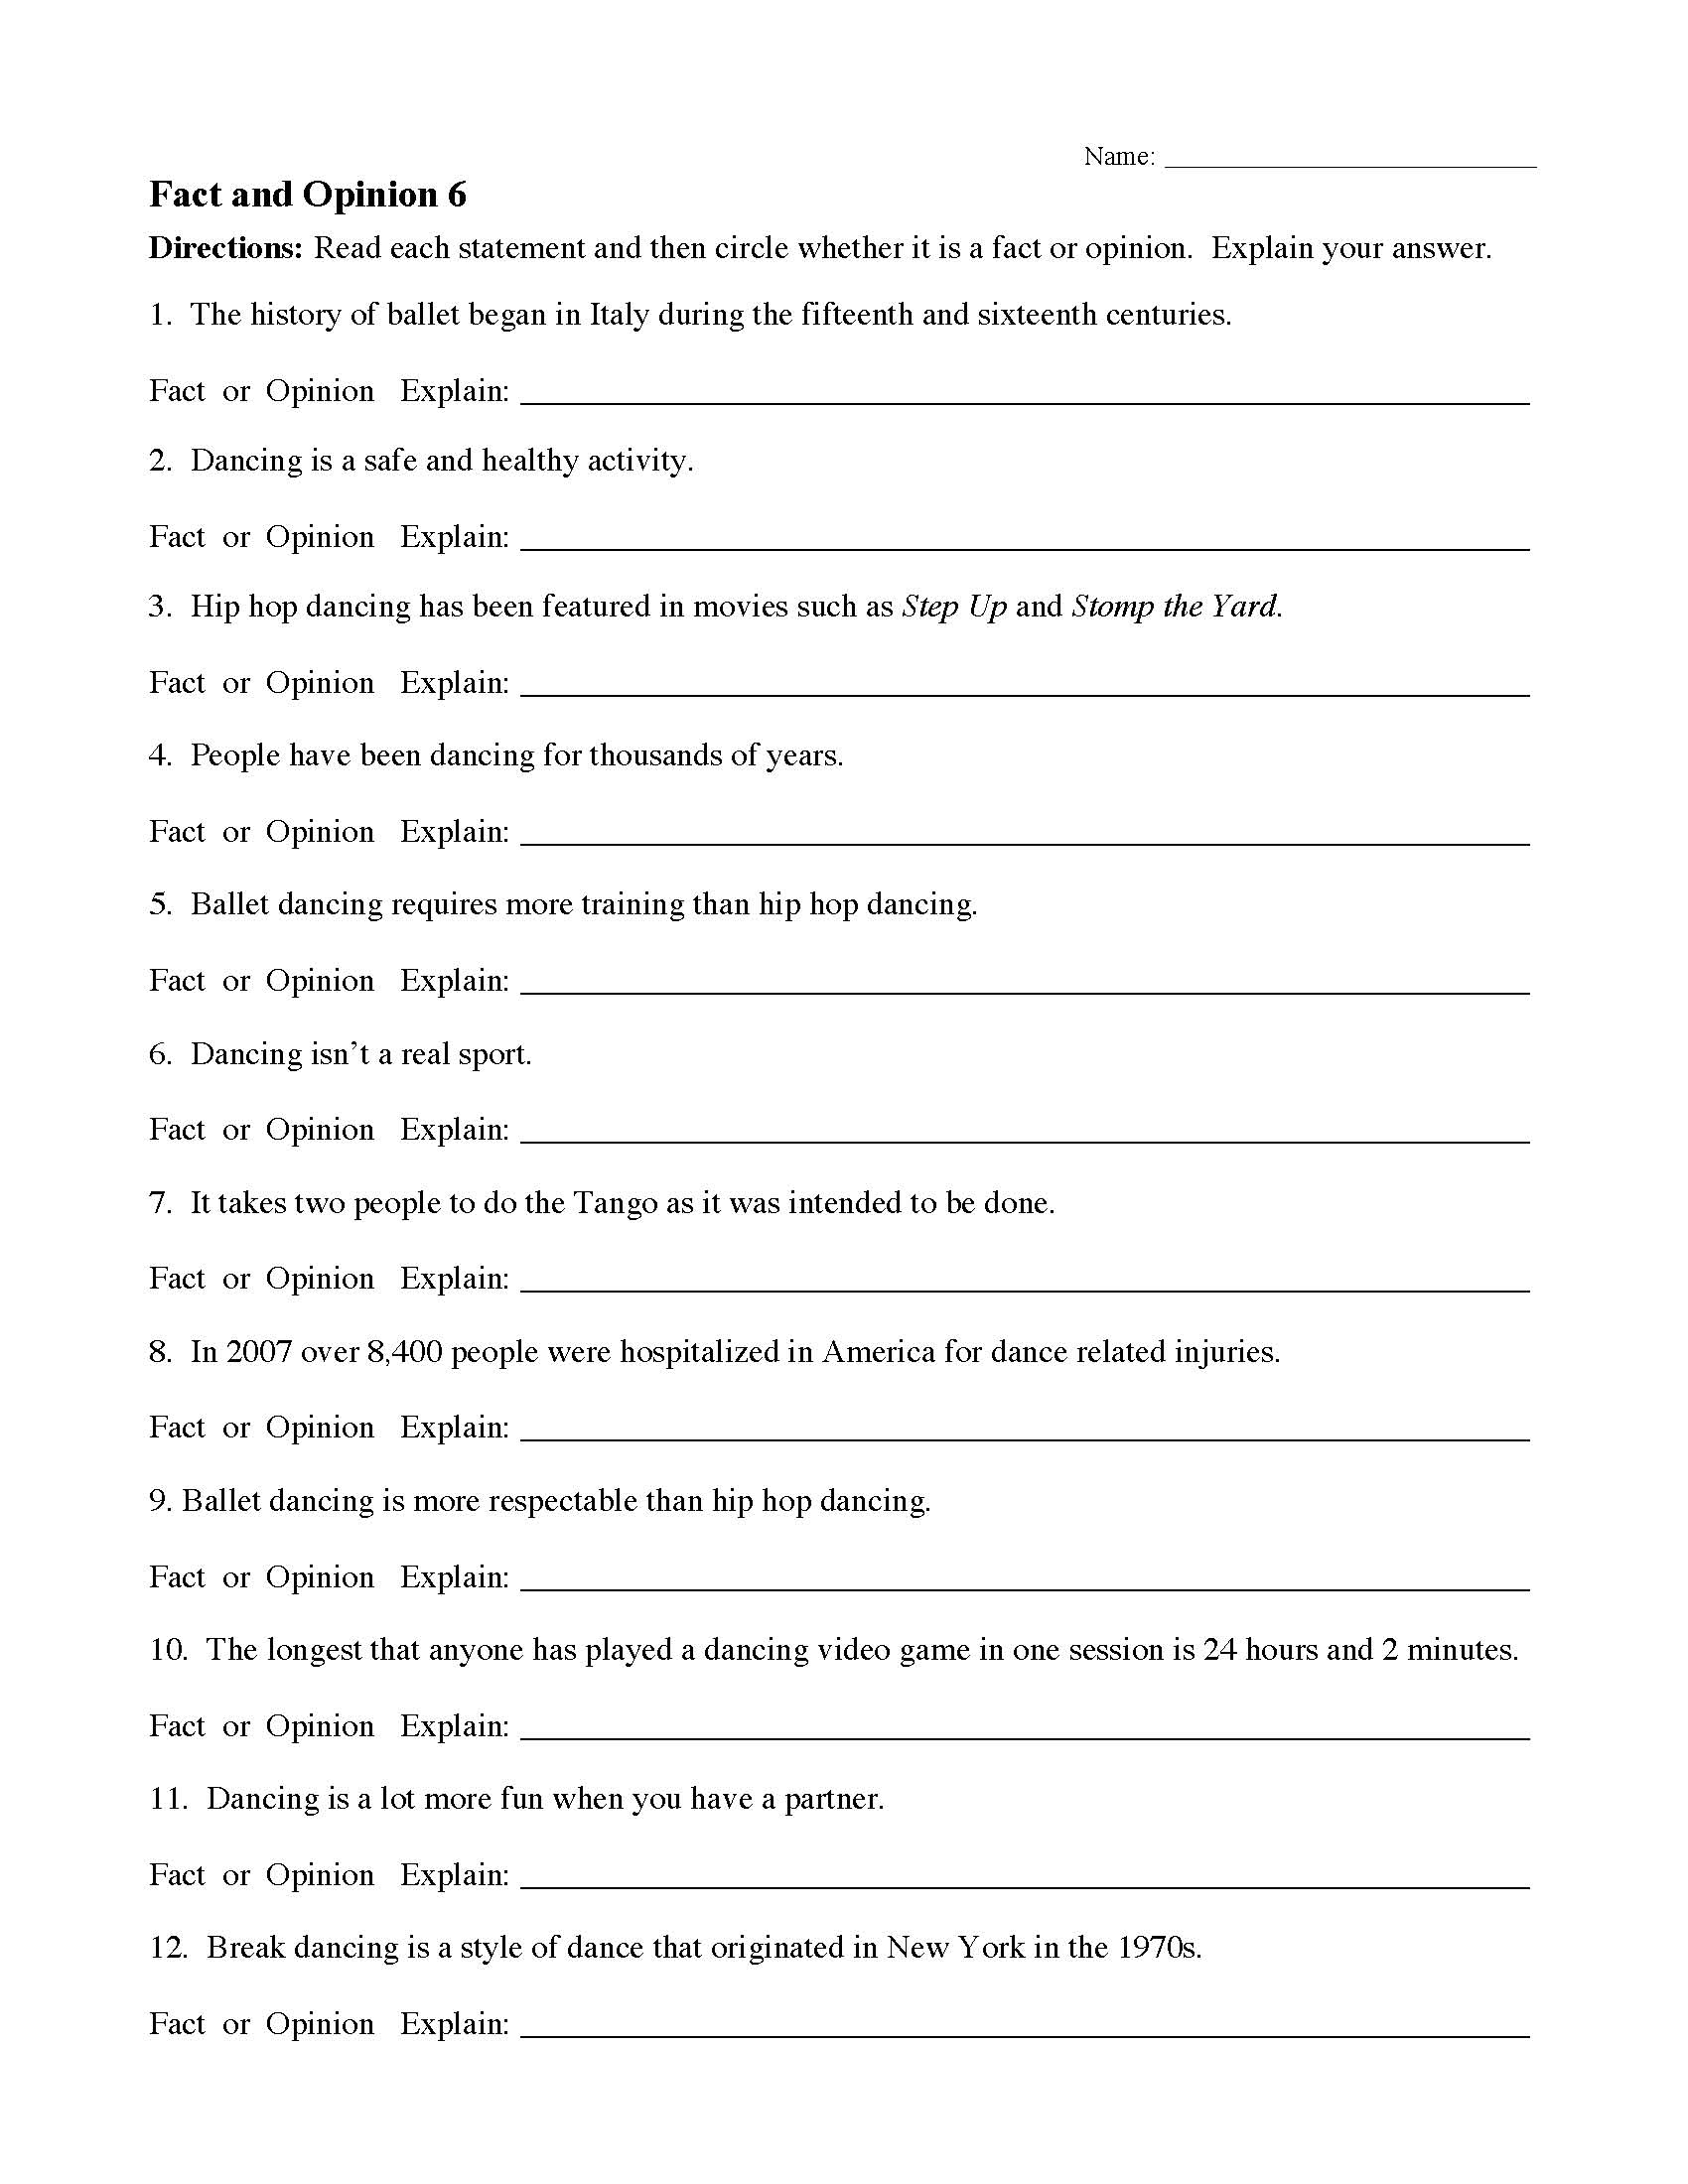 32-interjections-worksheet-5th-grade-support-worksheet